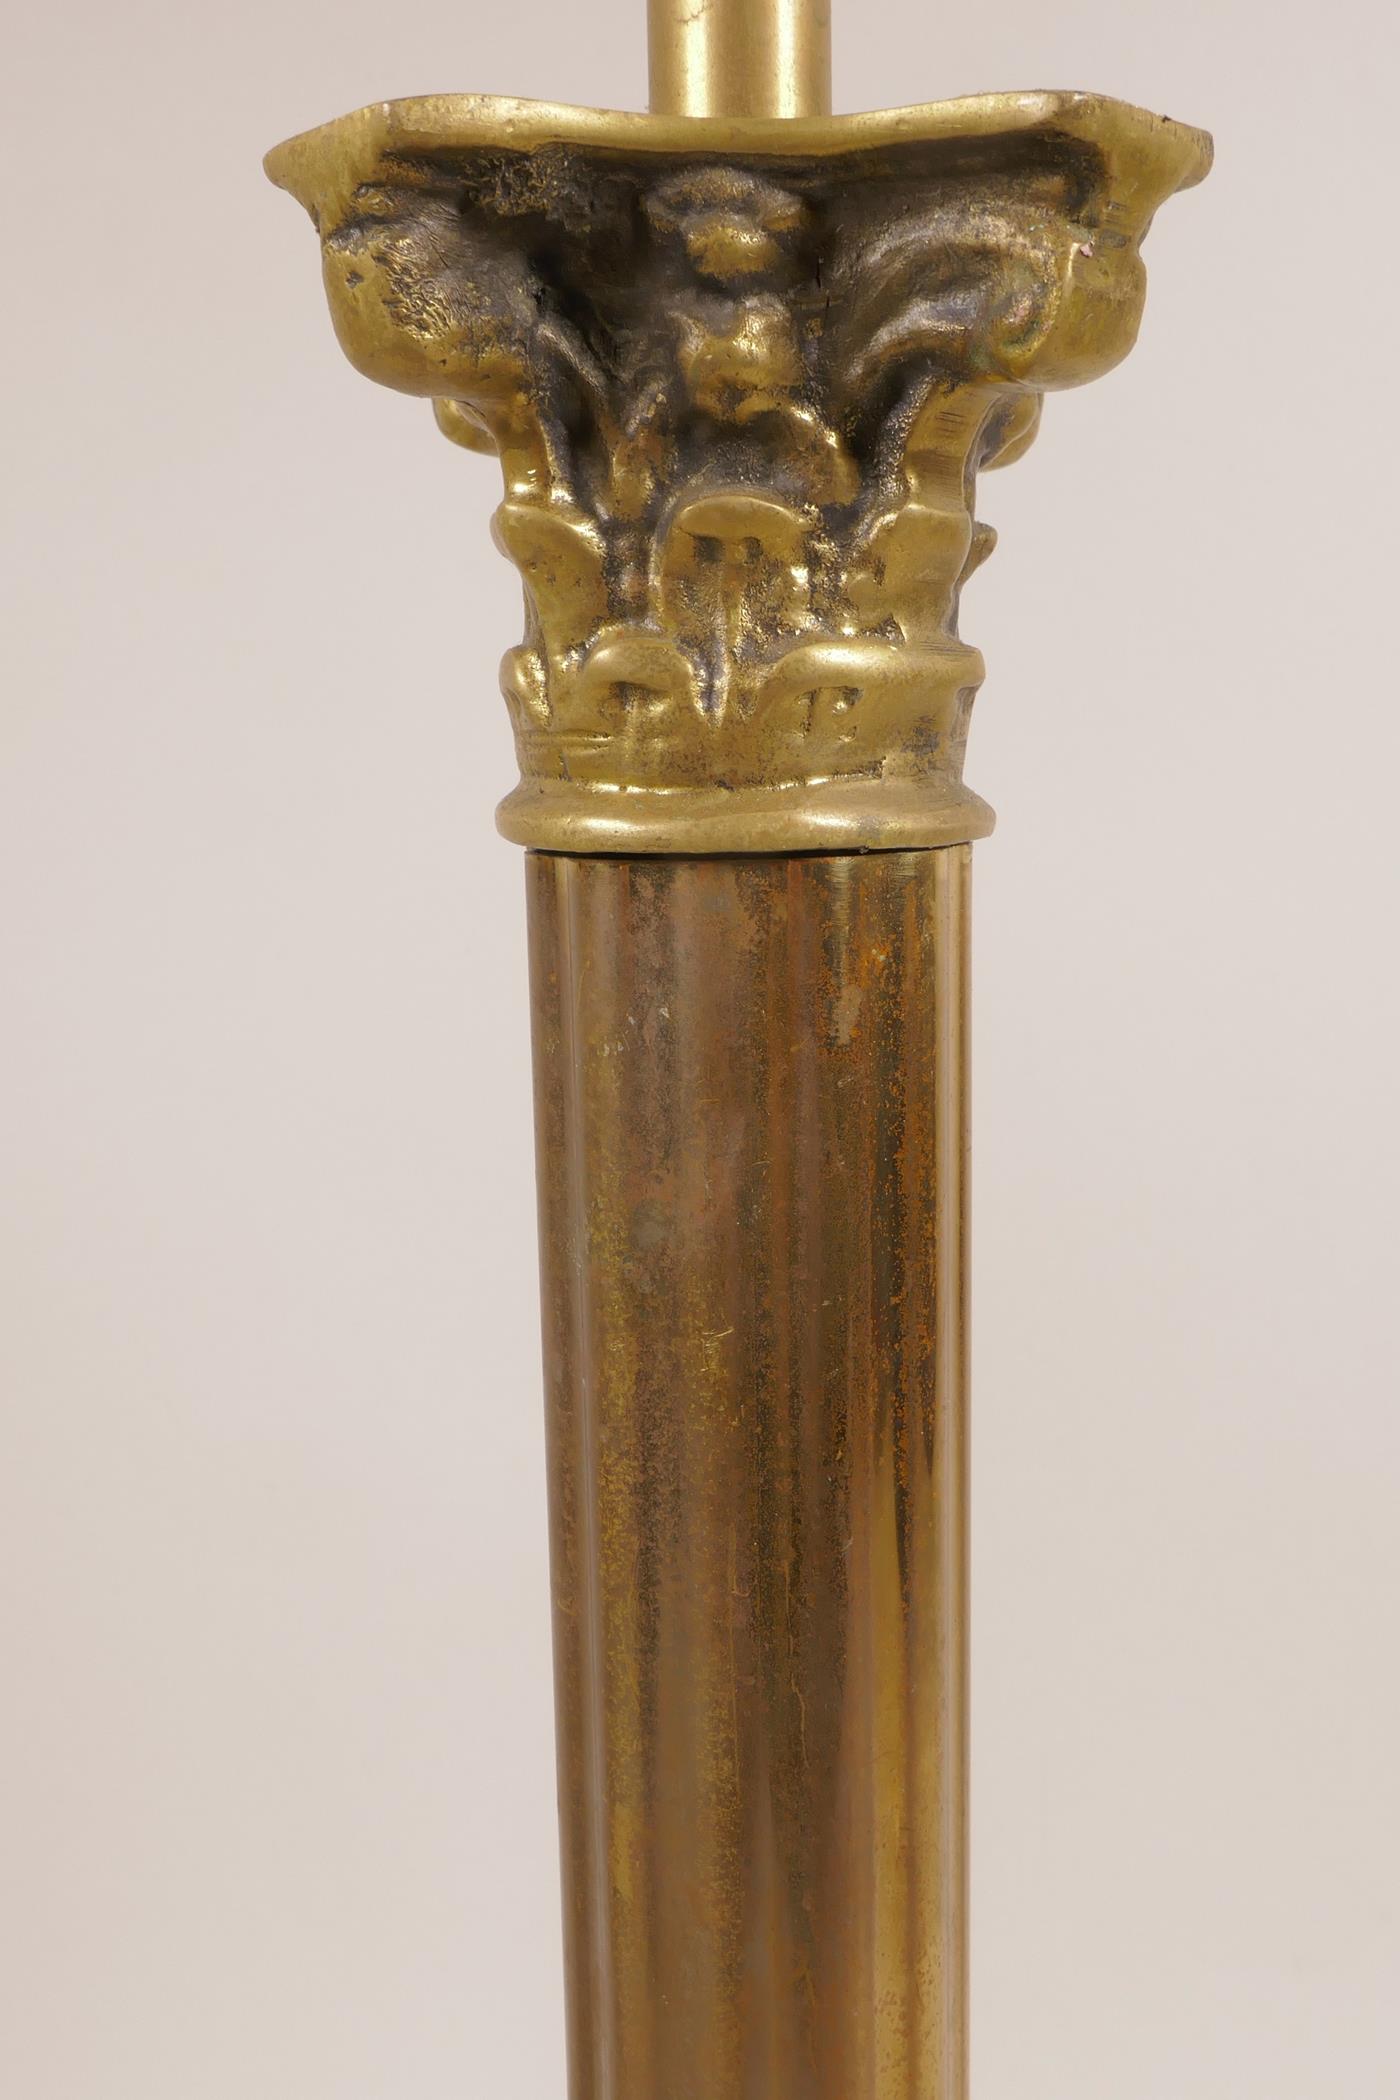 A pair of Corinthian column brass lamps, 19" high x 5" wide - Image 2 of 3